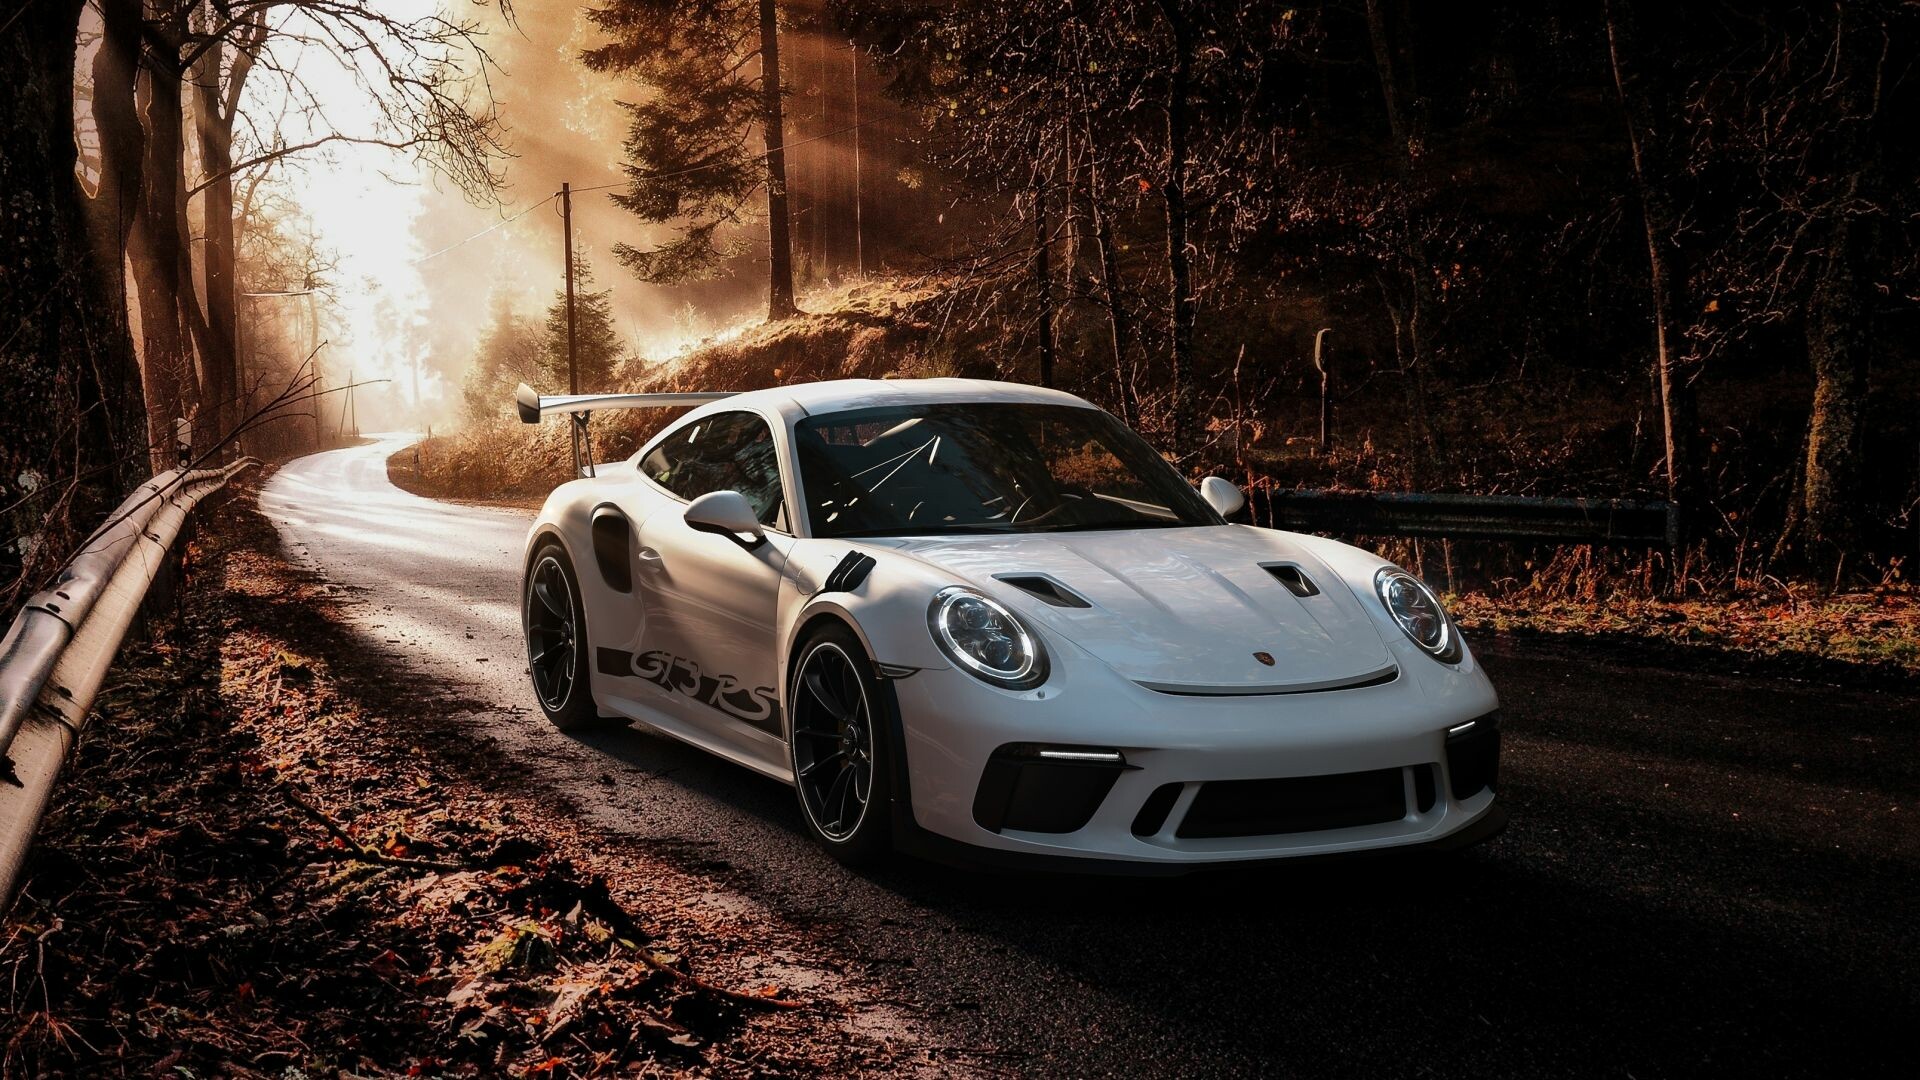 Porsche: GT3 RS, 2019, Luxury sports car. 1920x1080 Full HD Wallpaper.